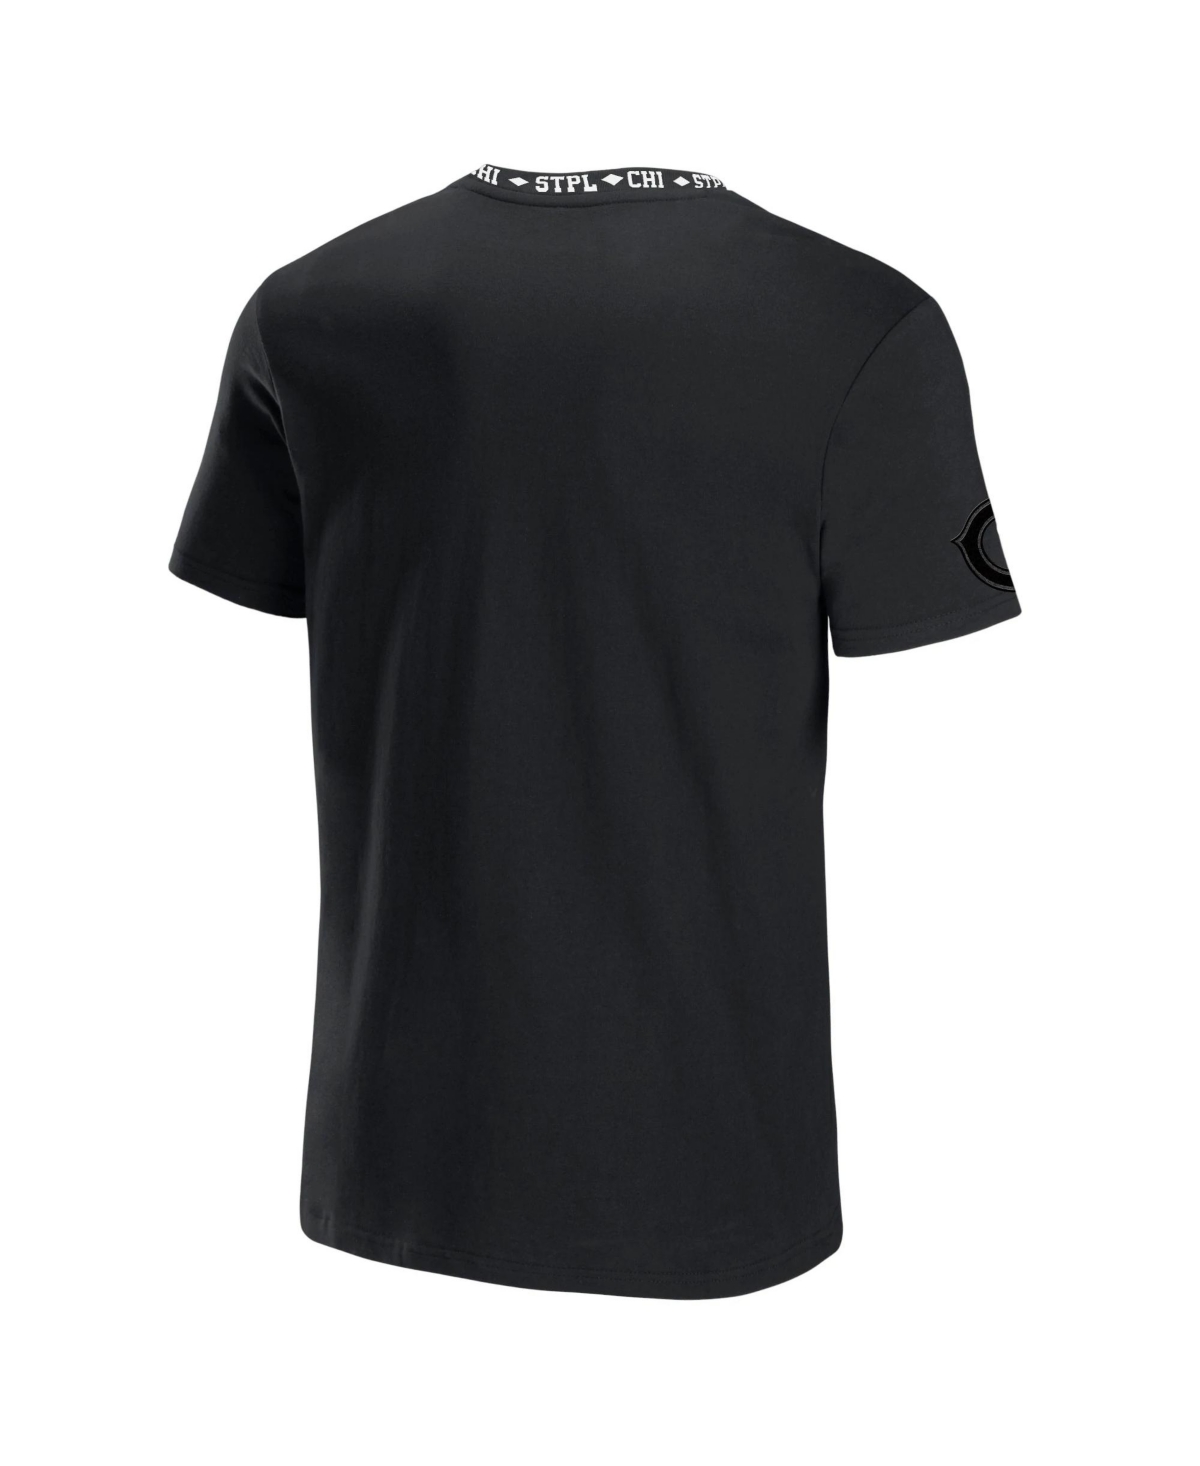 Shop Nfl Properties Men's Nfl X Staple Black Chicago Bears Embroidered Fundementals Globe Short Sleeve T-shirt